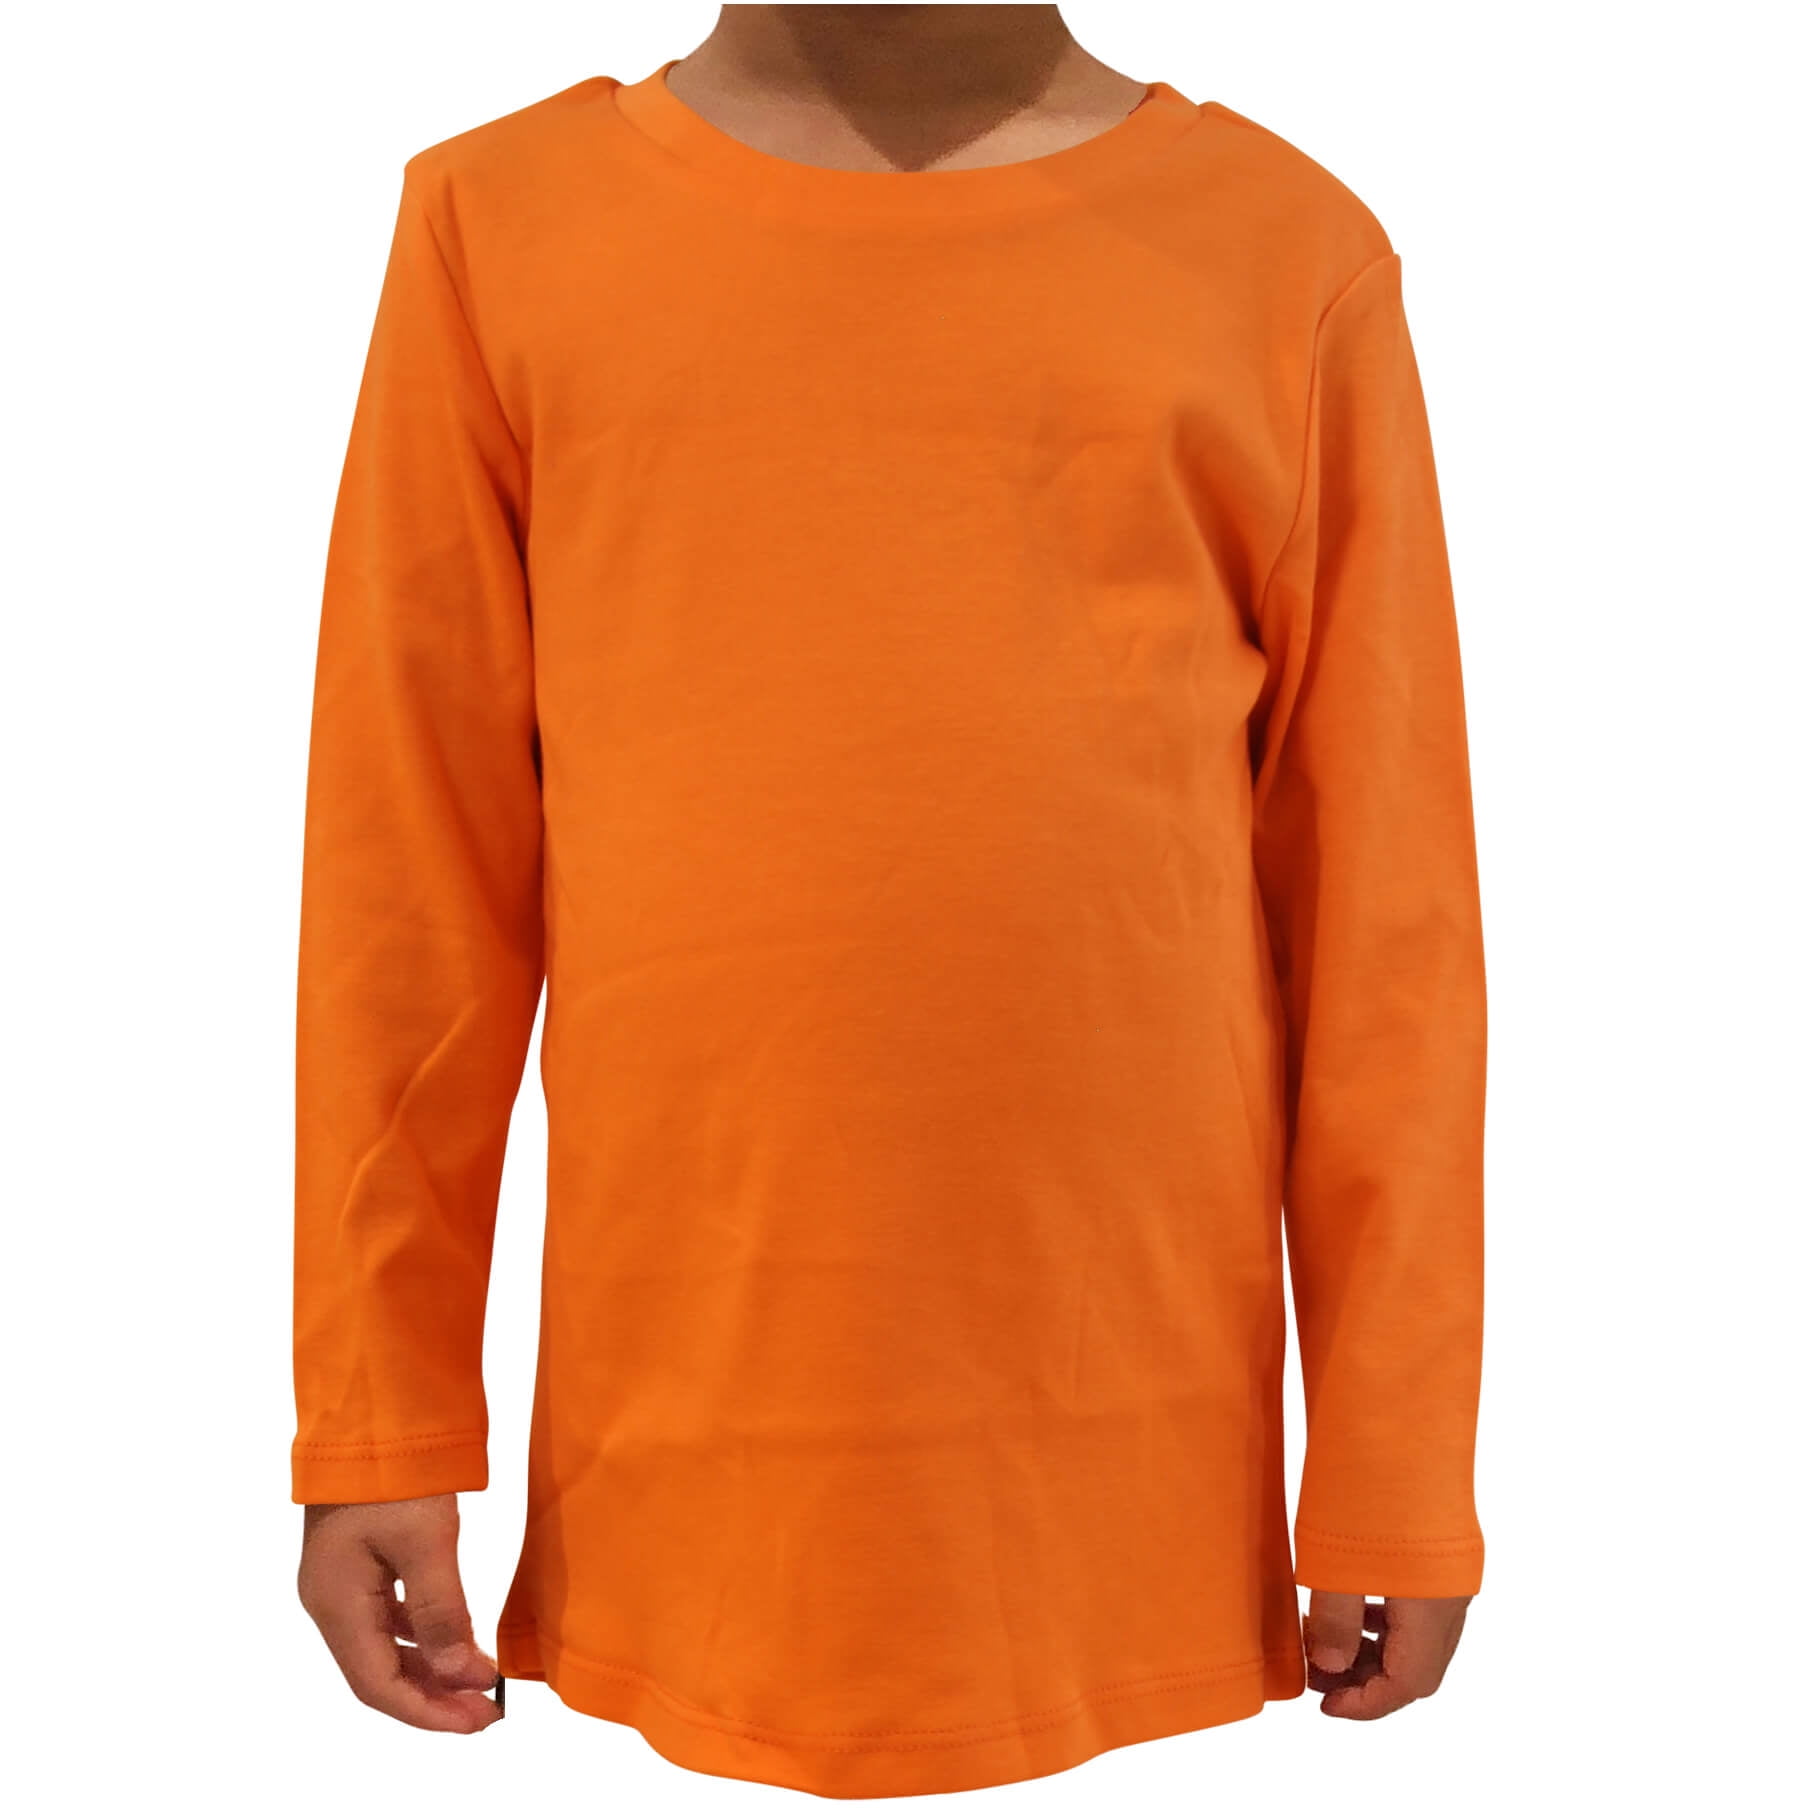 Kids Shirt, Color 12M, Cotton Sleeve Neck Plain Long 1 pc. Crew Red/White,